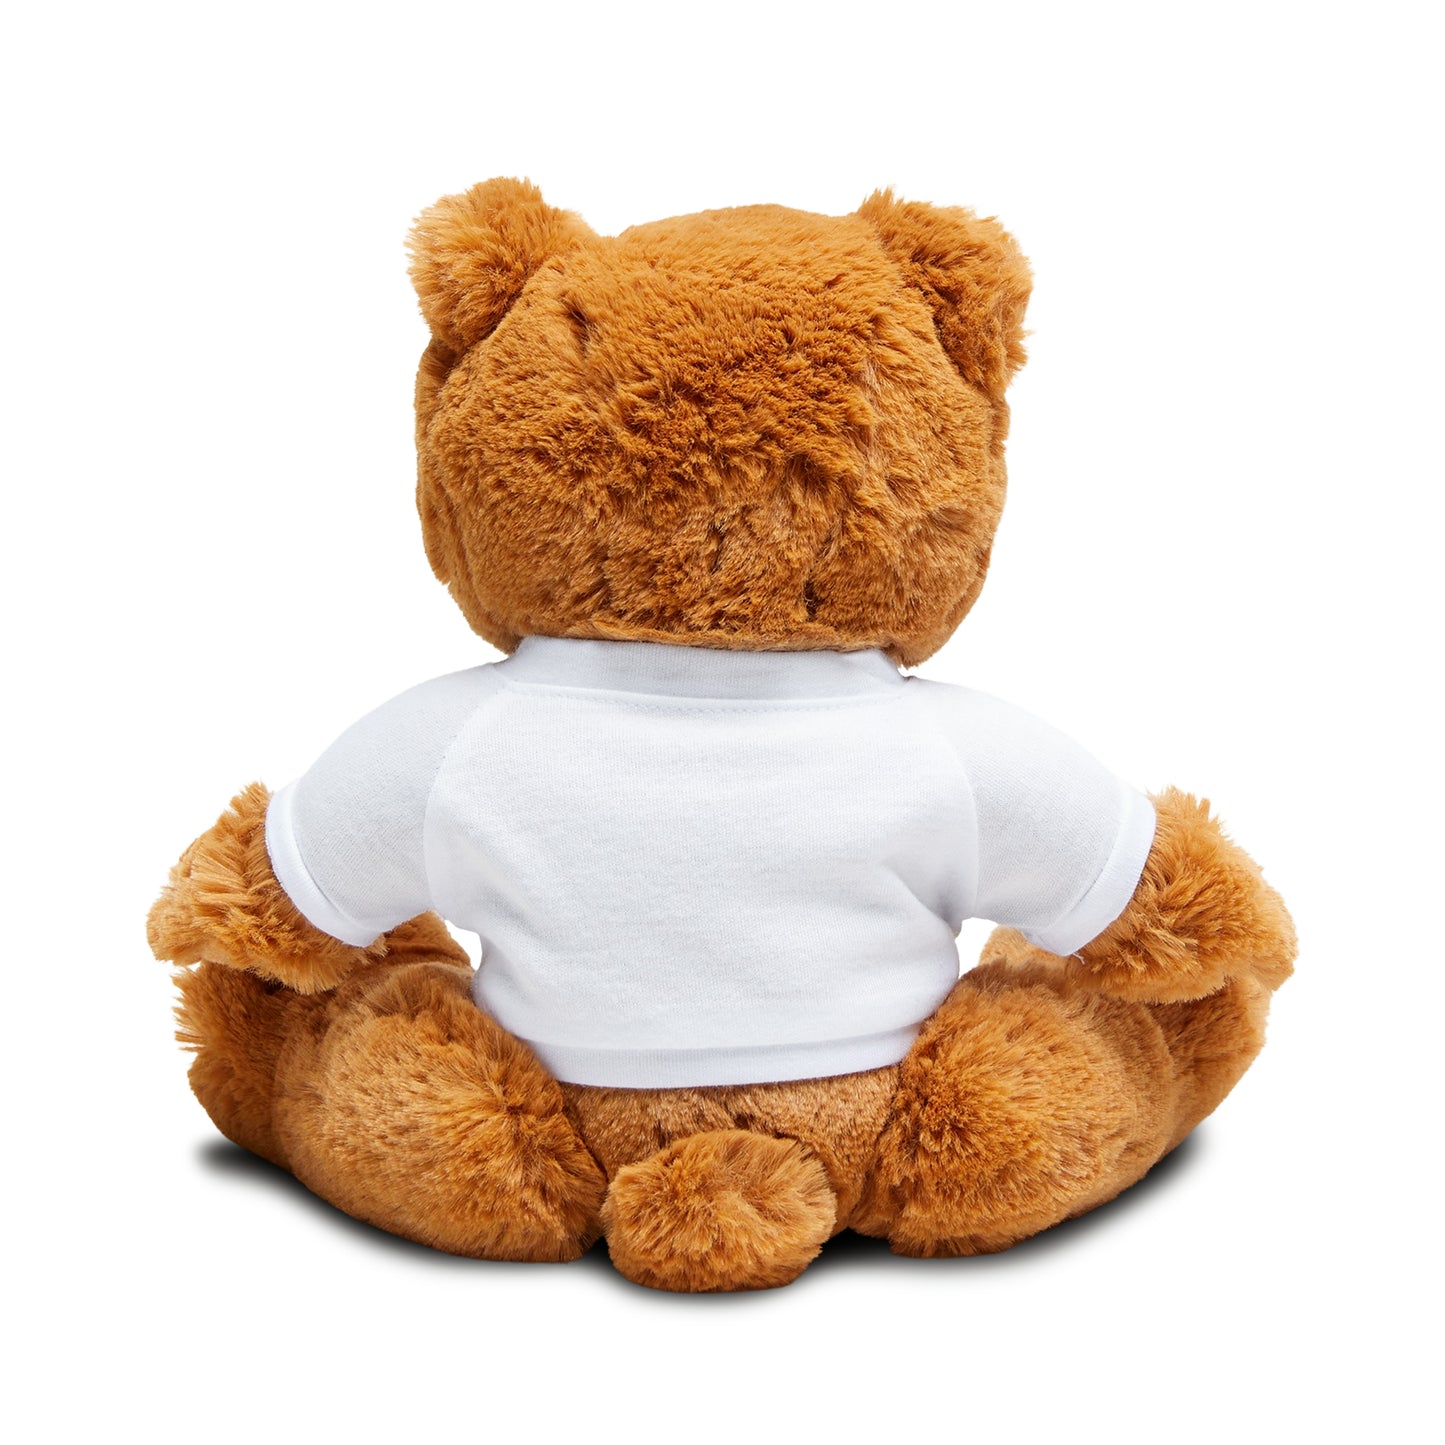 My Night To Remember - Teddy Bear